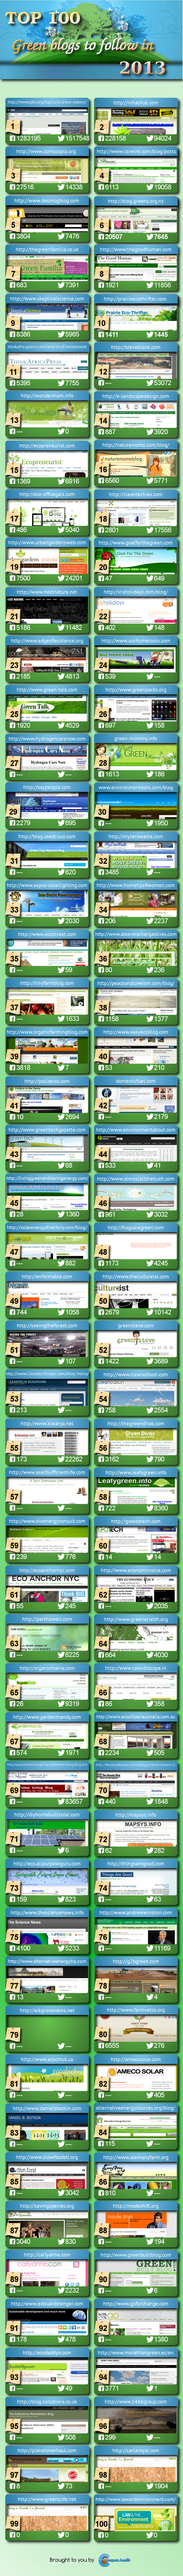 Top 100 Green blogs to follow